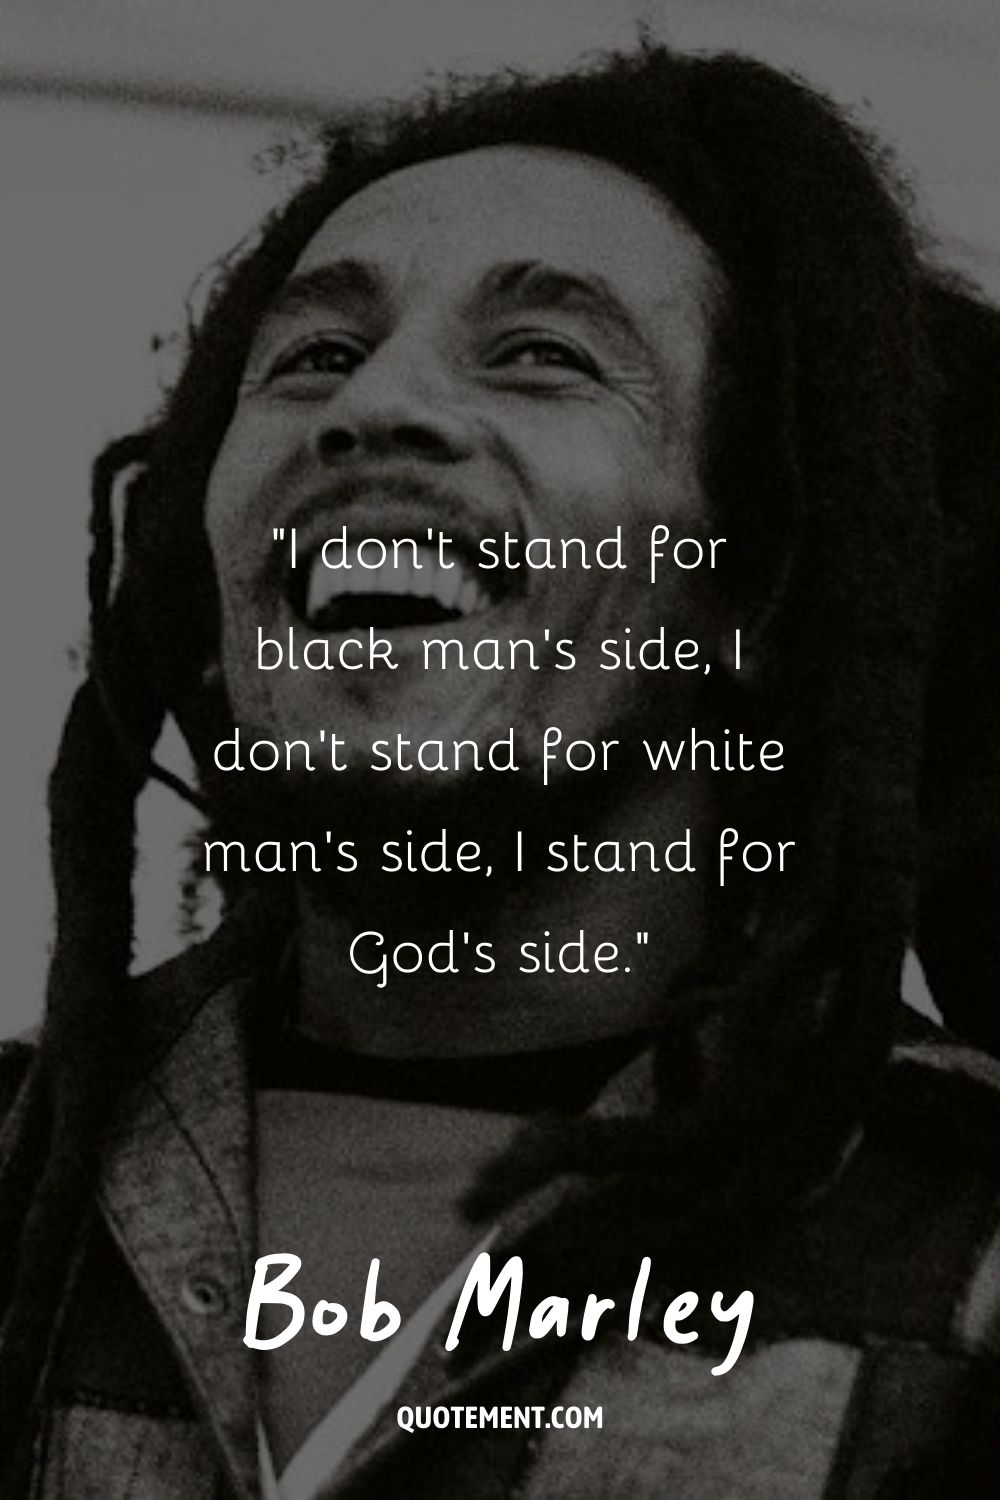 Bob Marley flashing a broad smile
